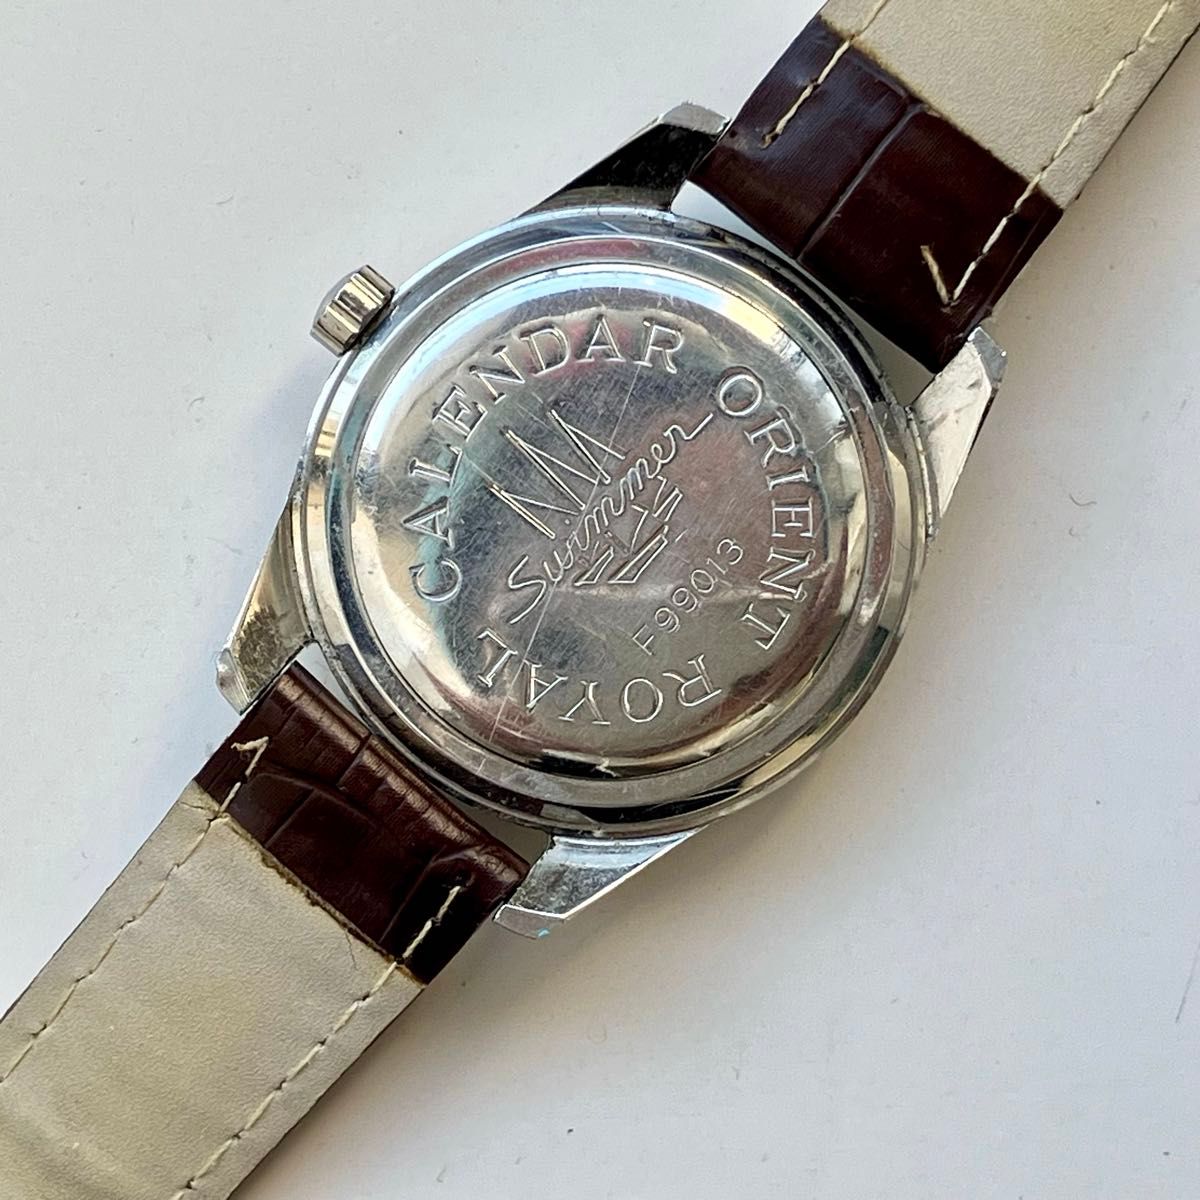 Royal Calendar Orient　60's　手巻き　ヴィンテージ腕時計